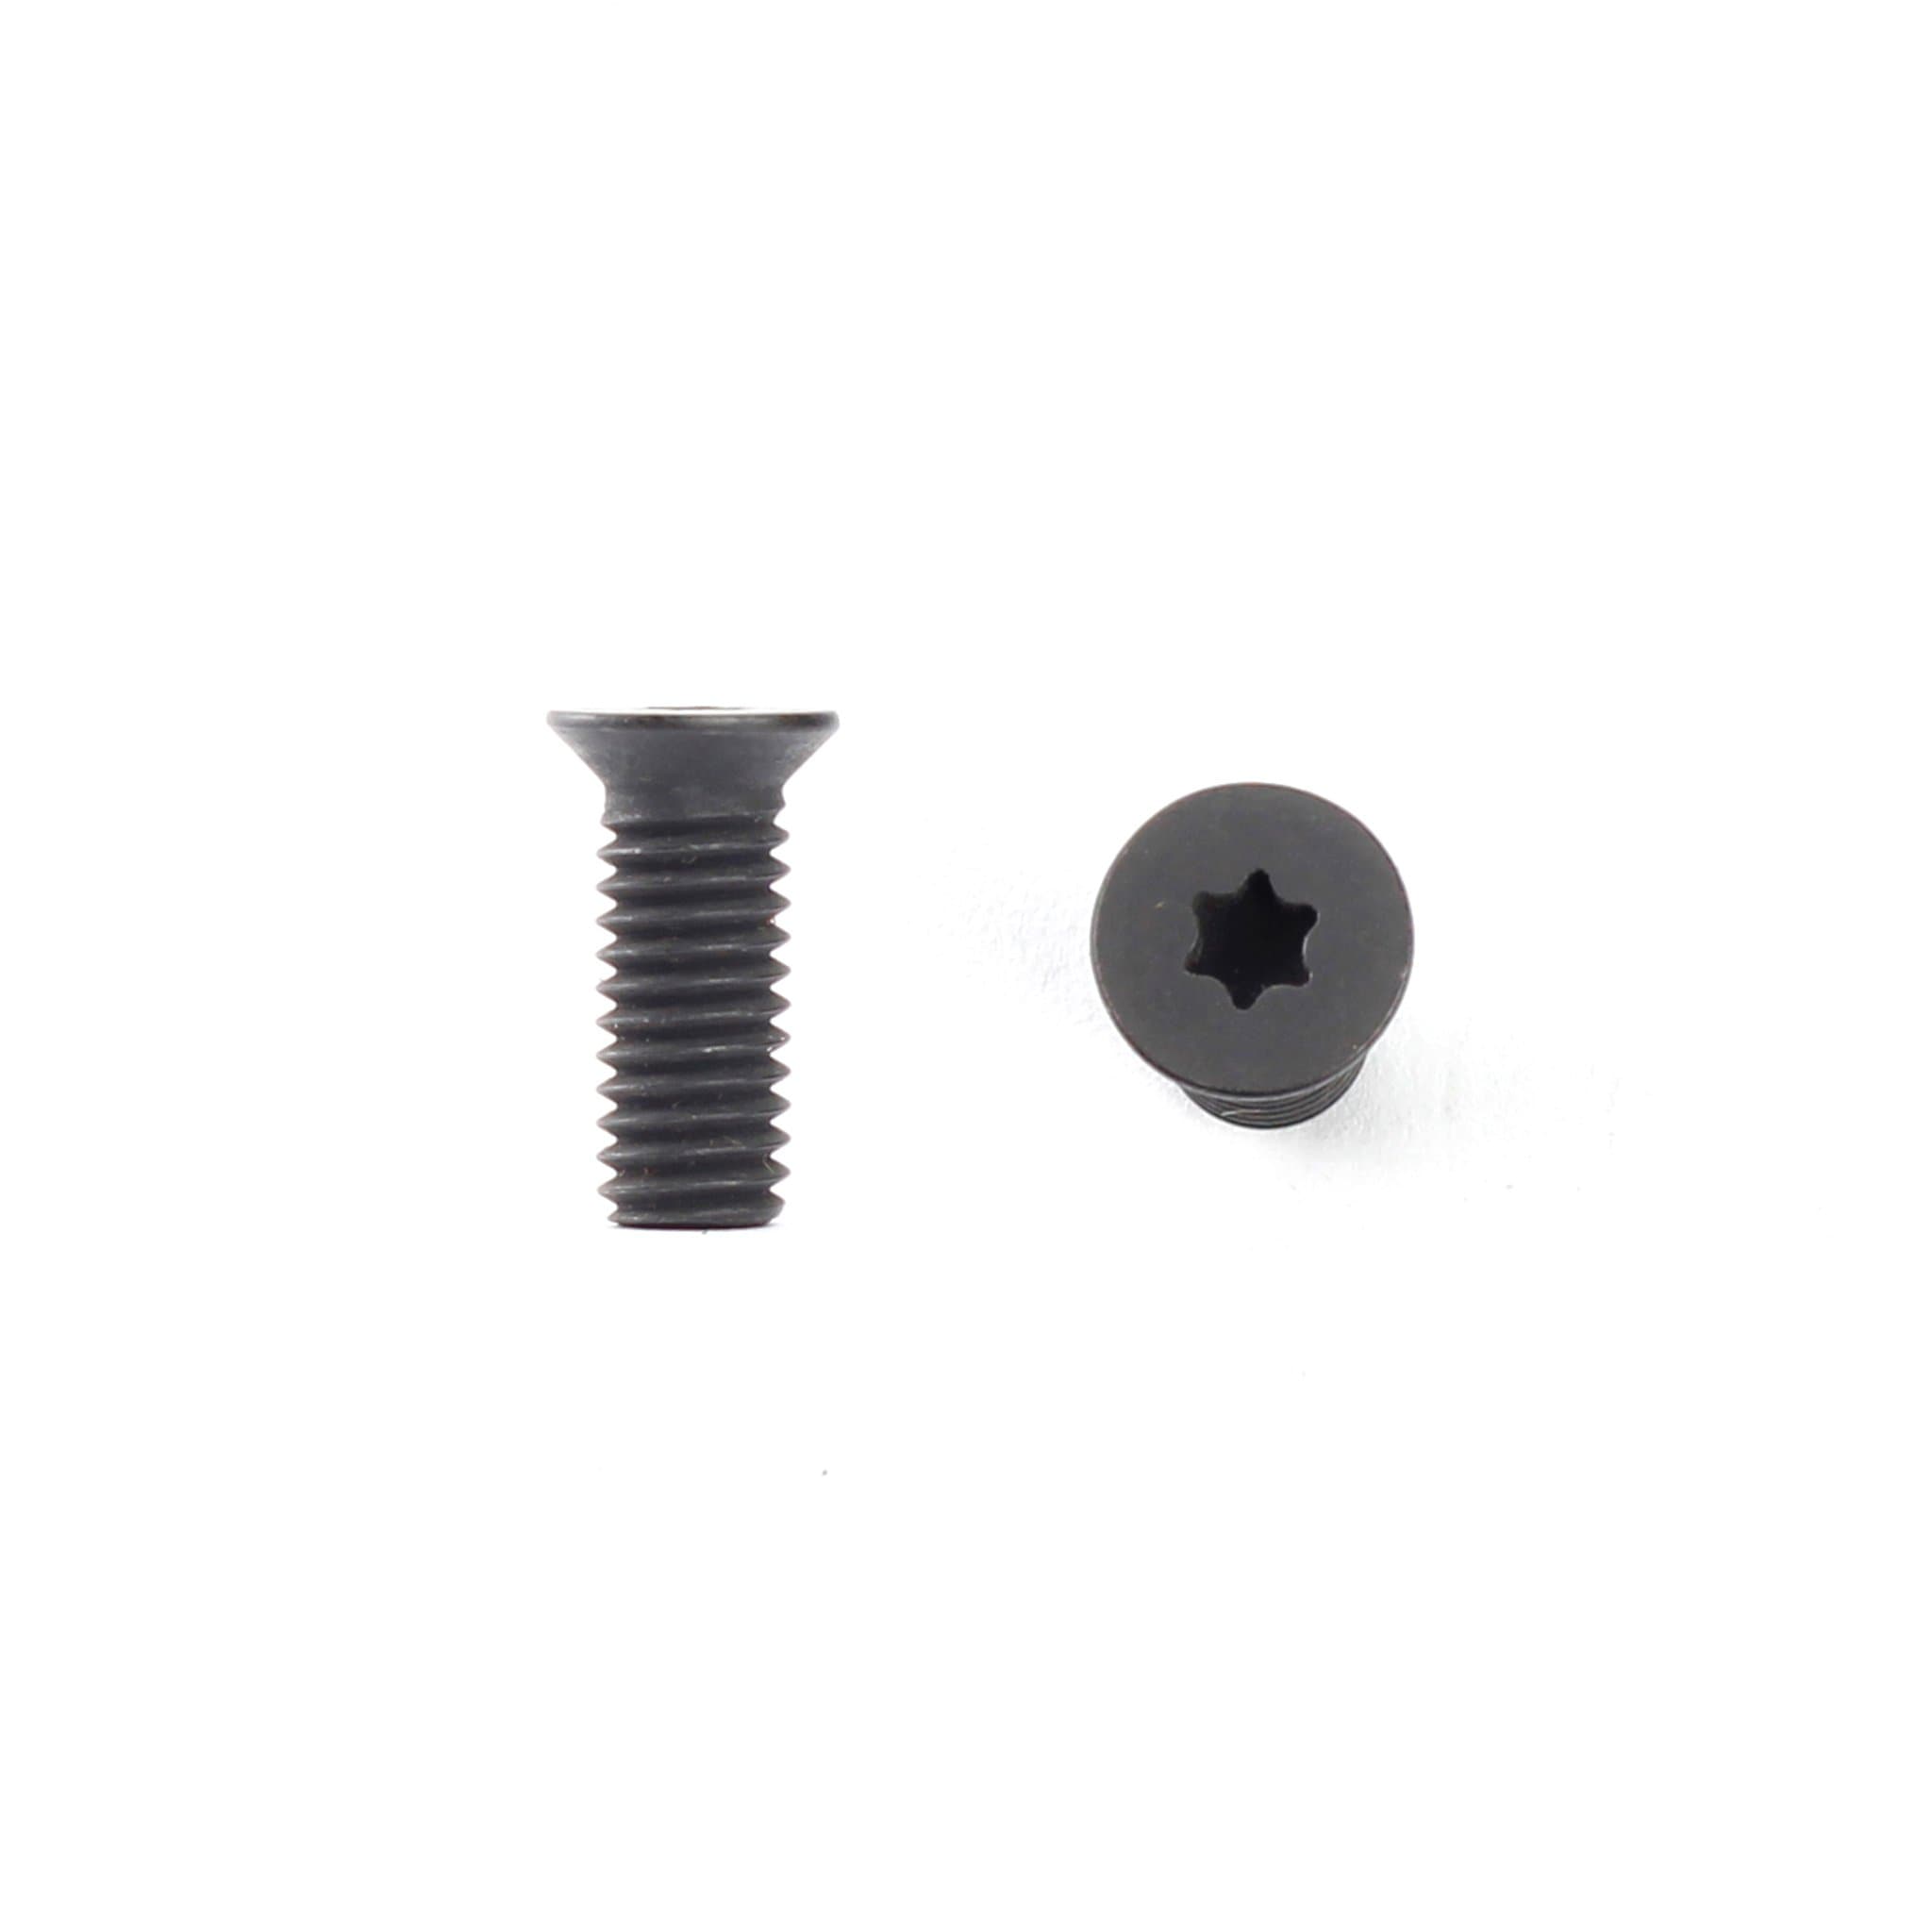 M5-0.8 Socket Head Insert Screw Replaces Carbide CNC Accessories